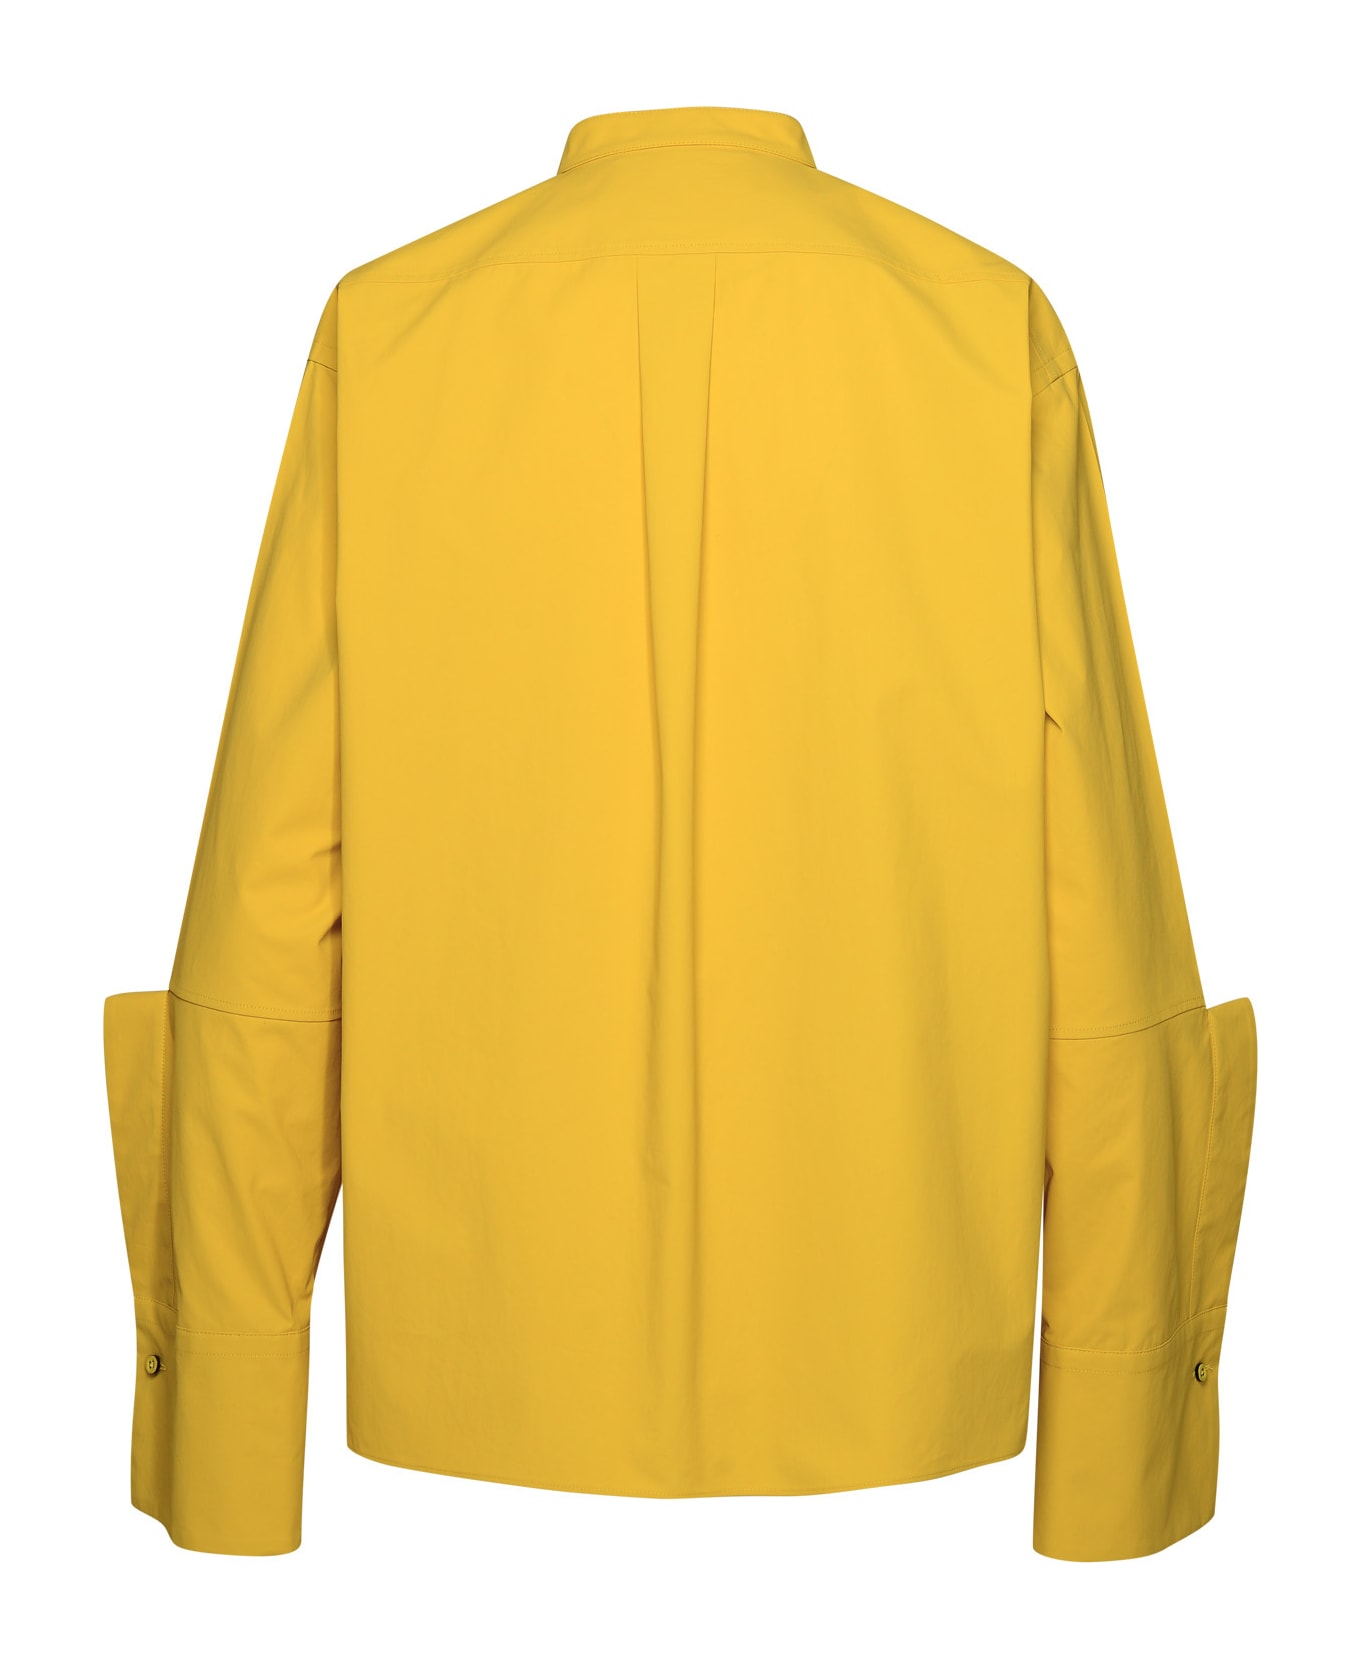 Jil Sander Mustard Cotton Shirt - Yellow